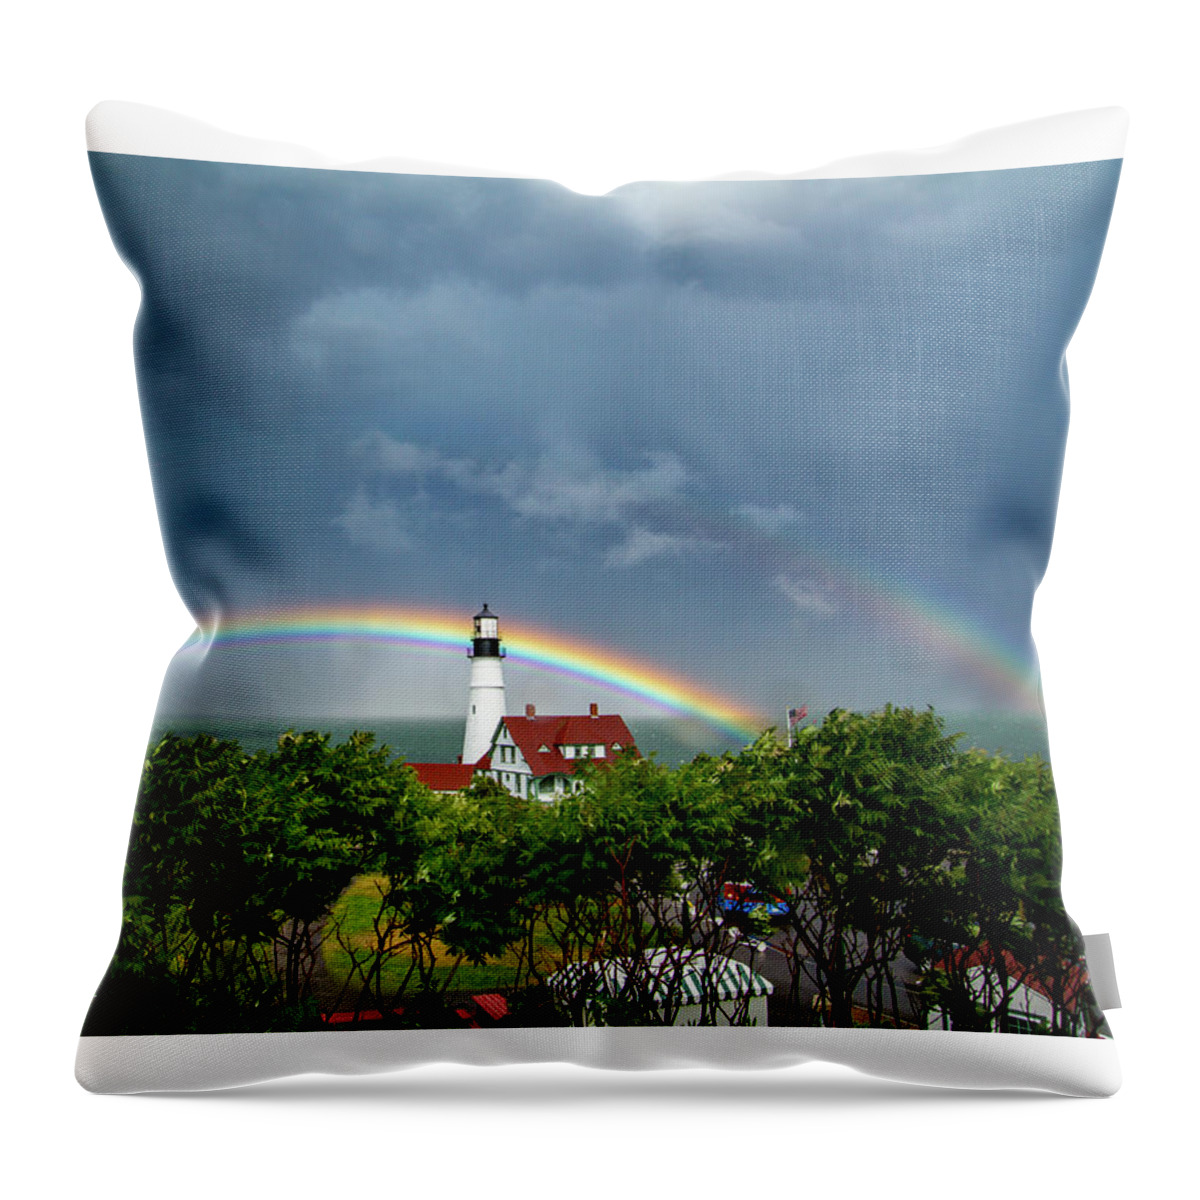 Portland Headlight Throw Pillow featuring the photograph Rainbow x 2 at Portland Headlight by Darryl Hendricks